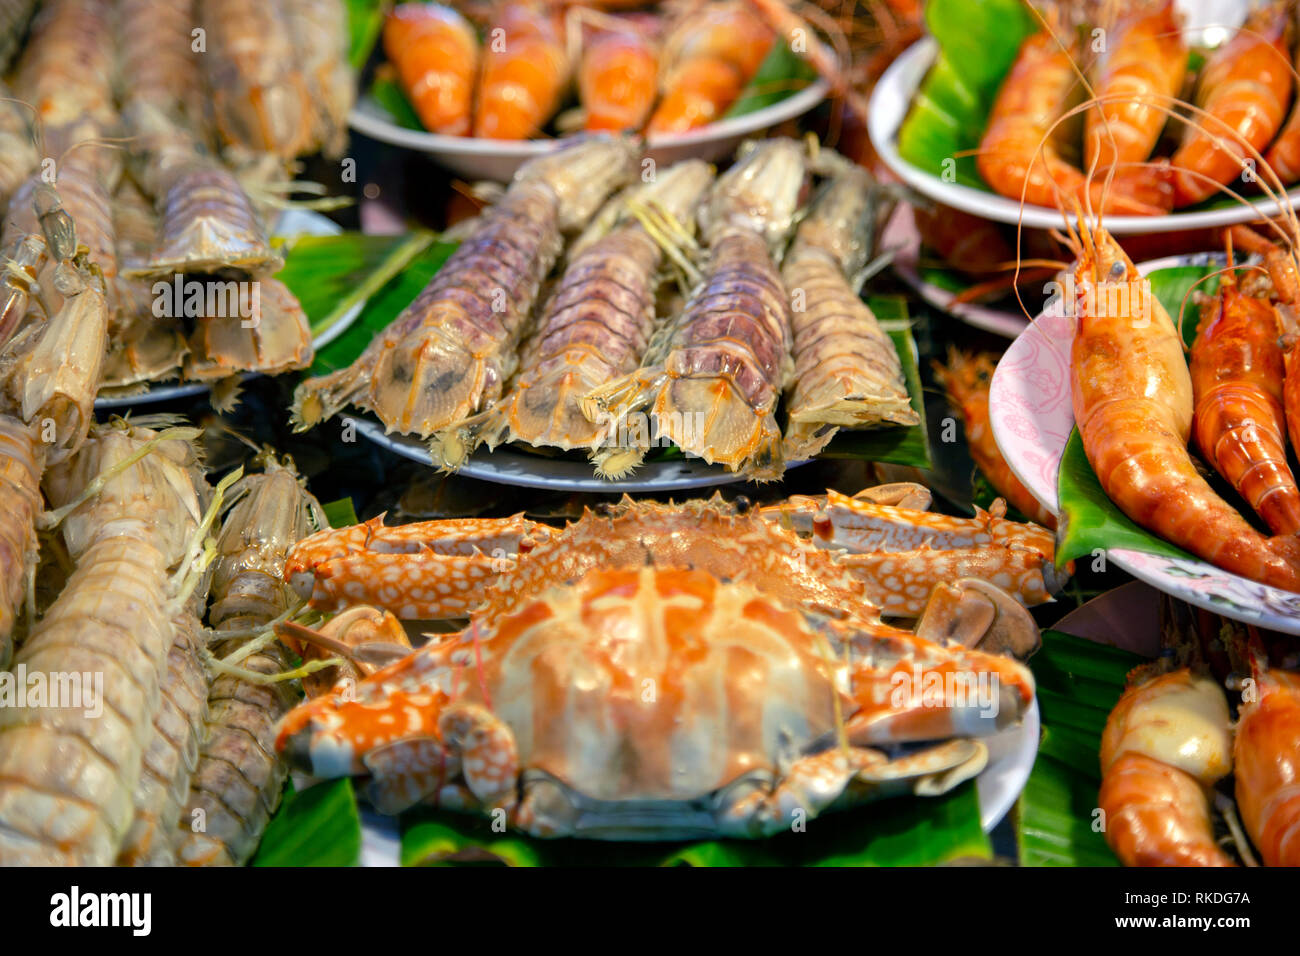 An arrangement of  cooked crab, shrimp, prawn, mantis prawn shellfish crustacean seafood at a fish market food stall in Phuket, Thailand. Stock Photo